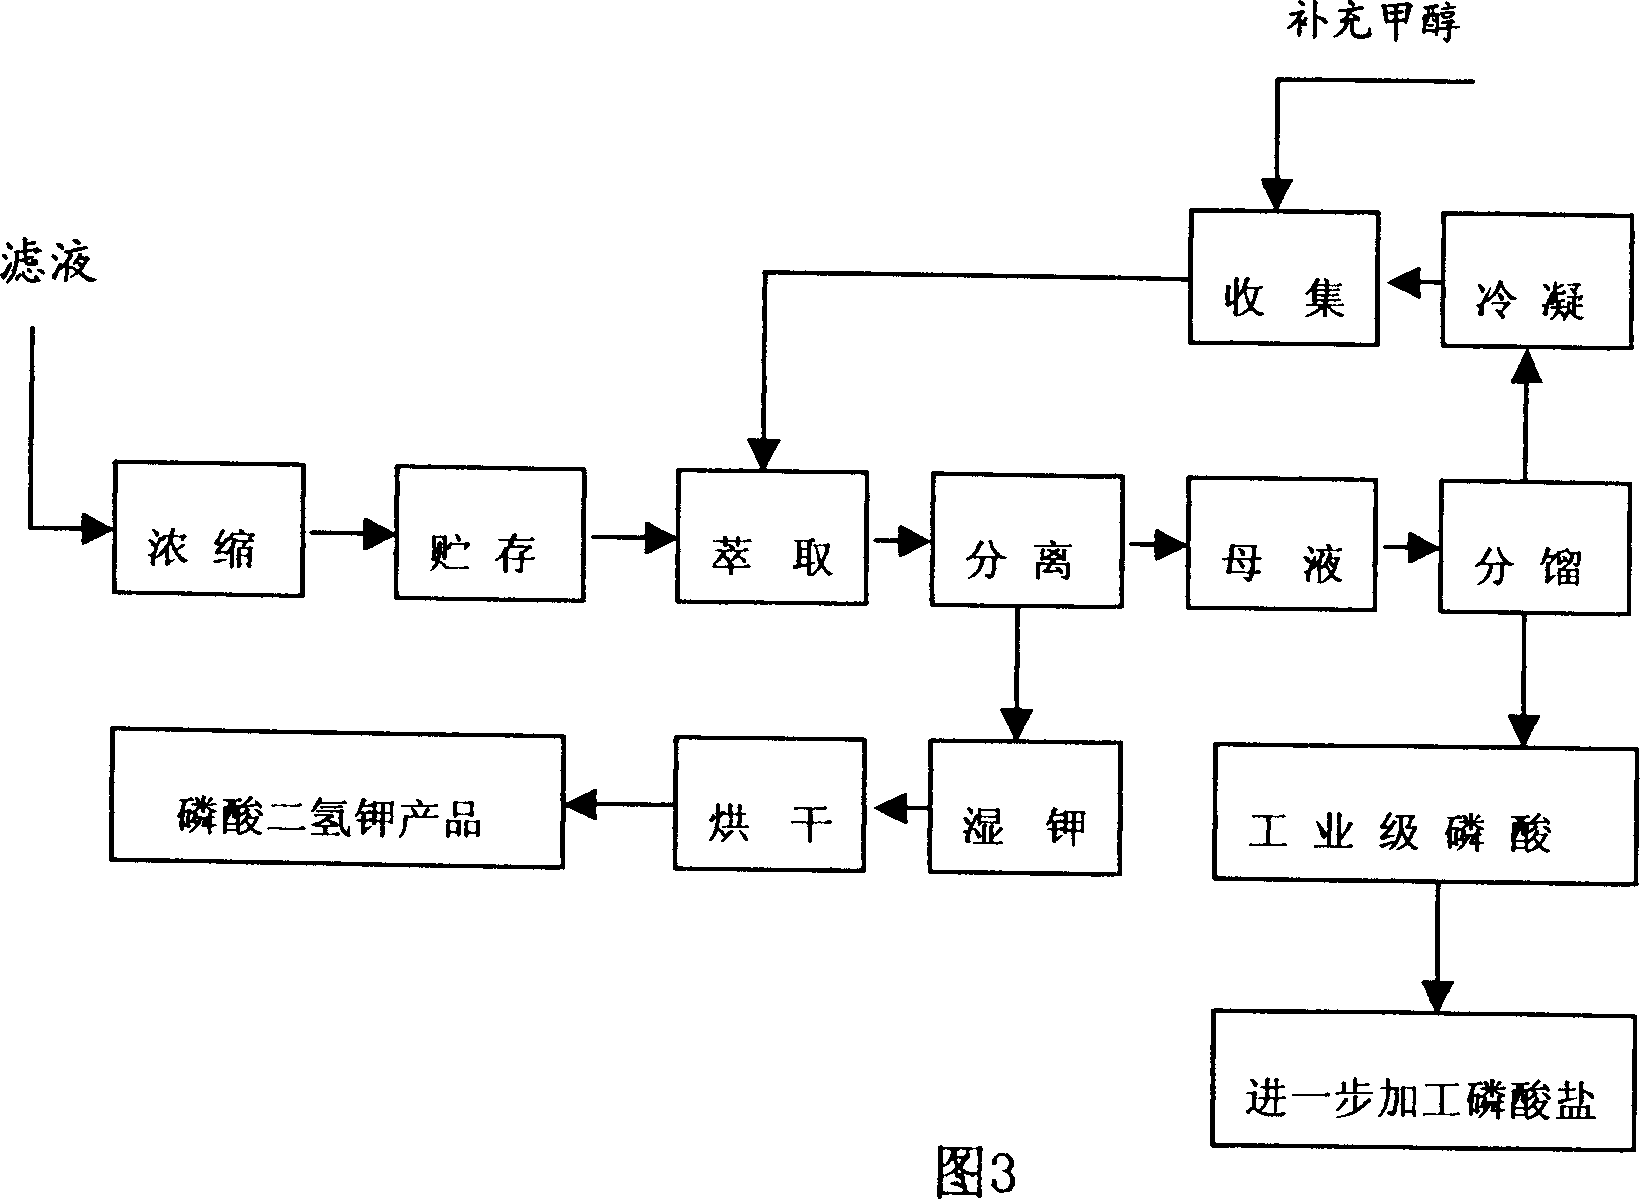 Production method of potassium dihydrogen phosphate